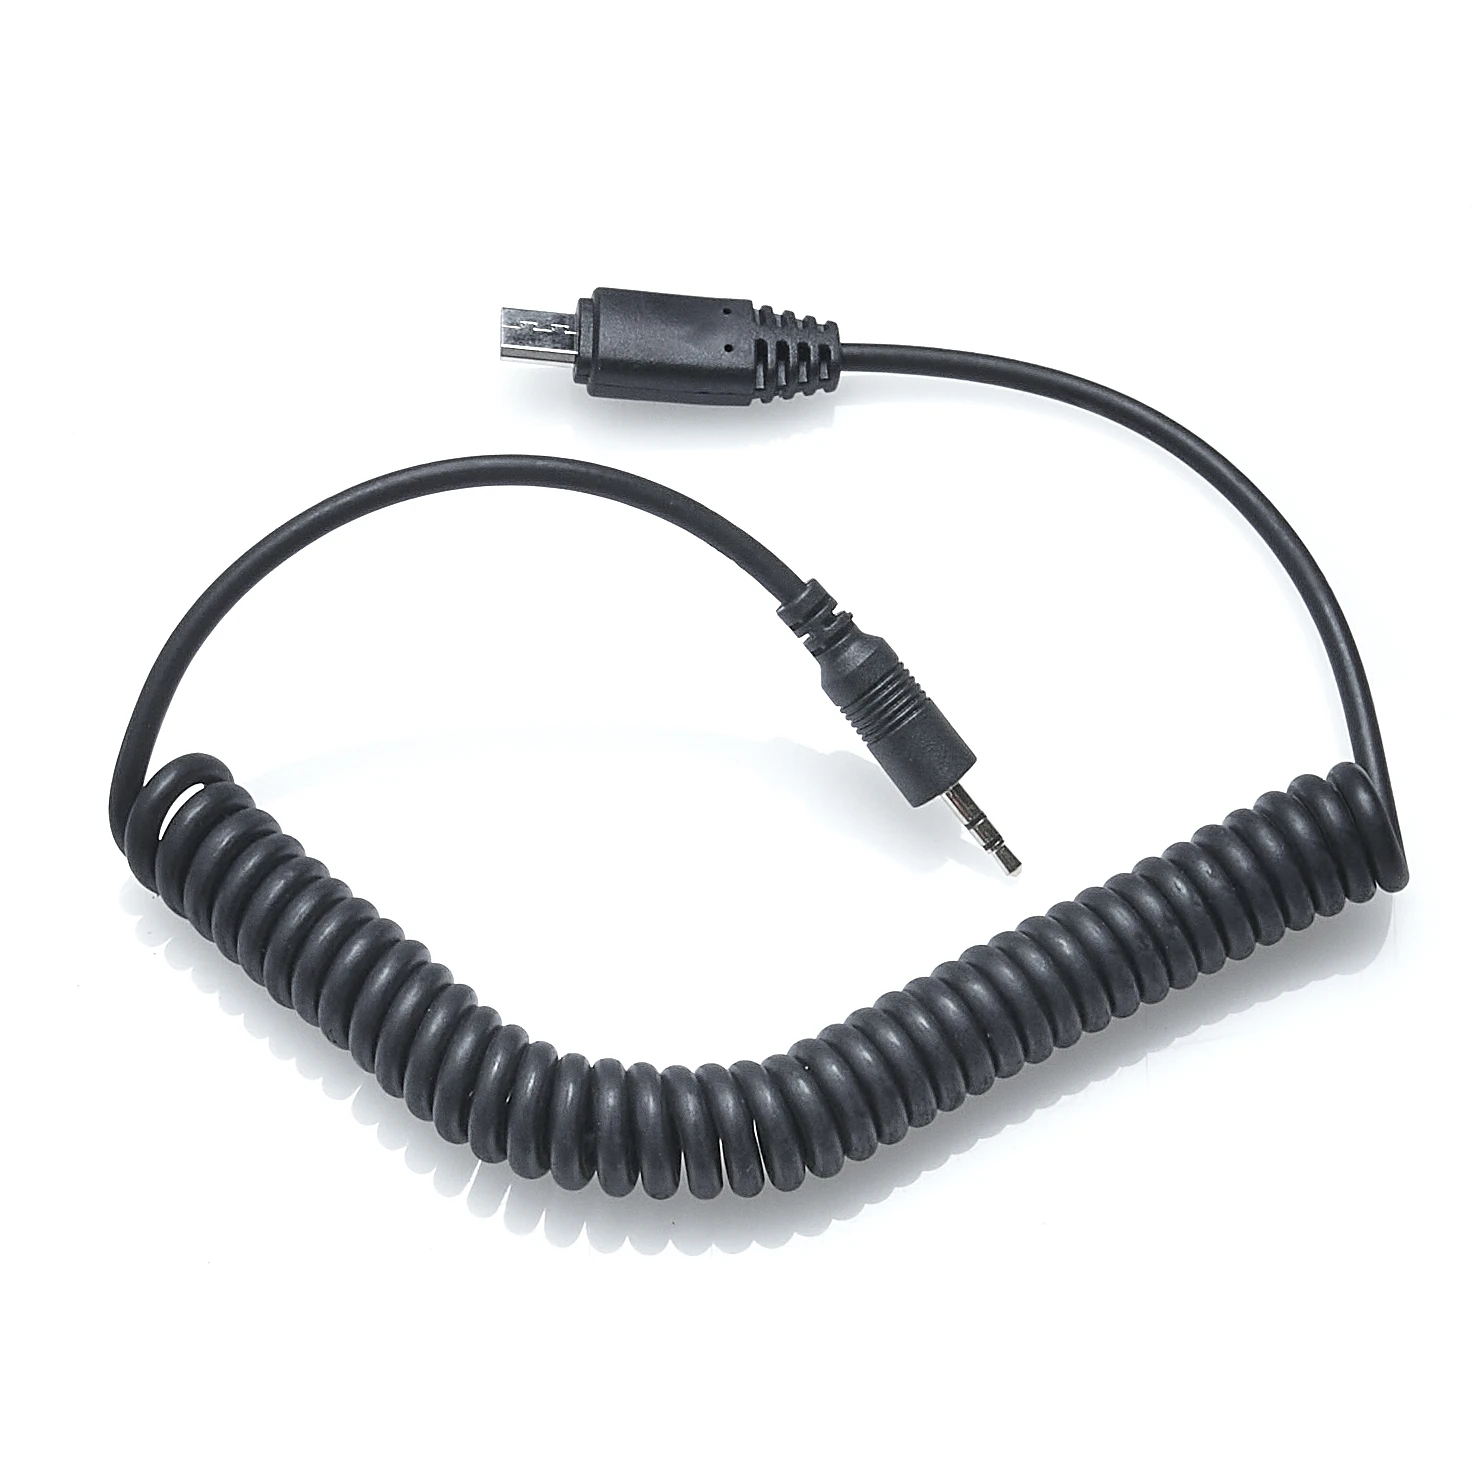 F9980-11L cable disparador compatible con Sony RM-VPR1 